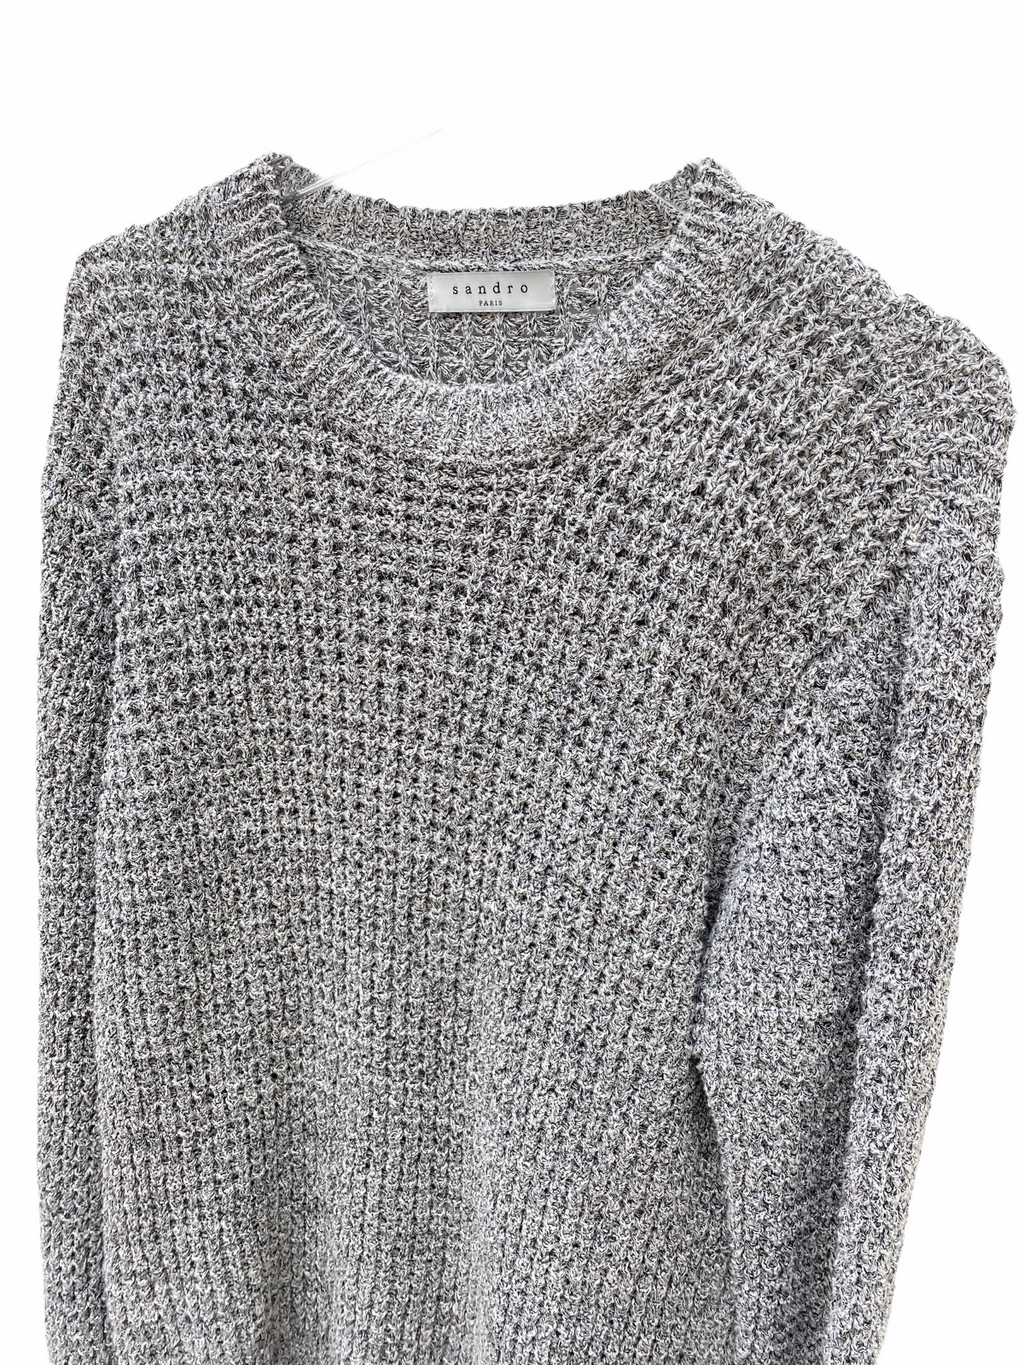 Sandro Grey Silence Sweater